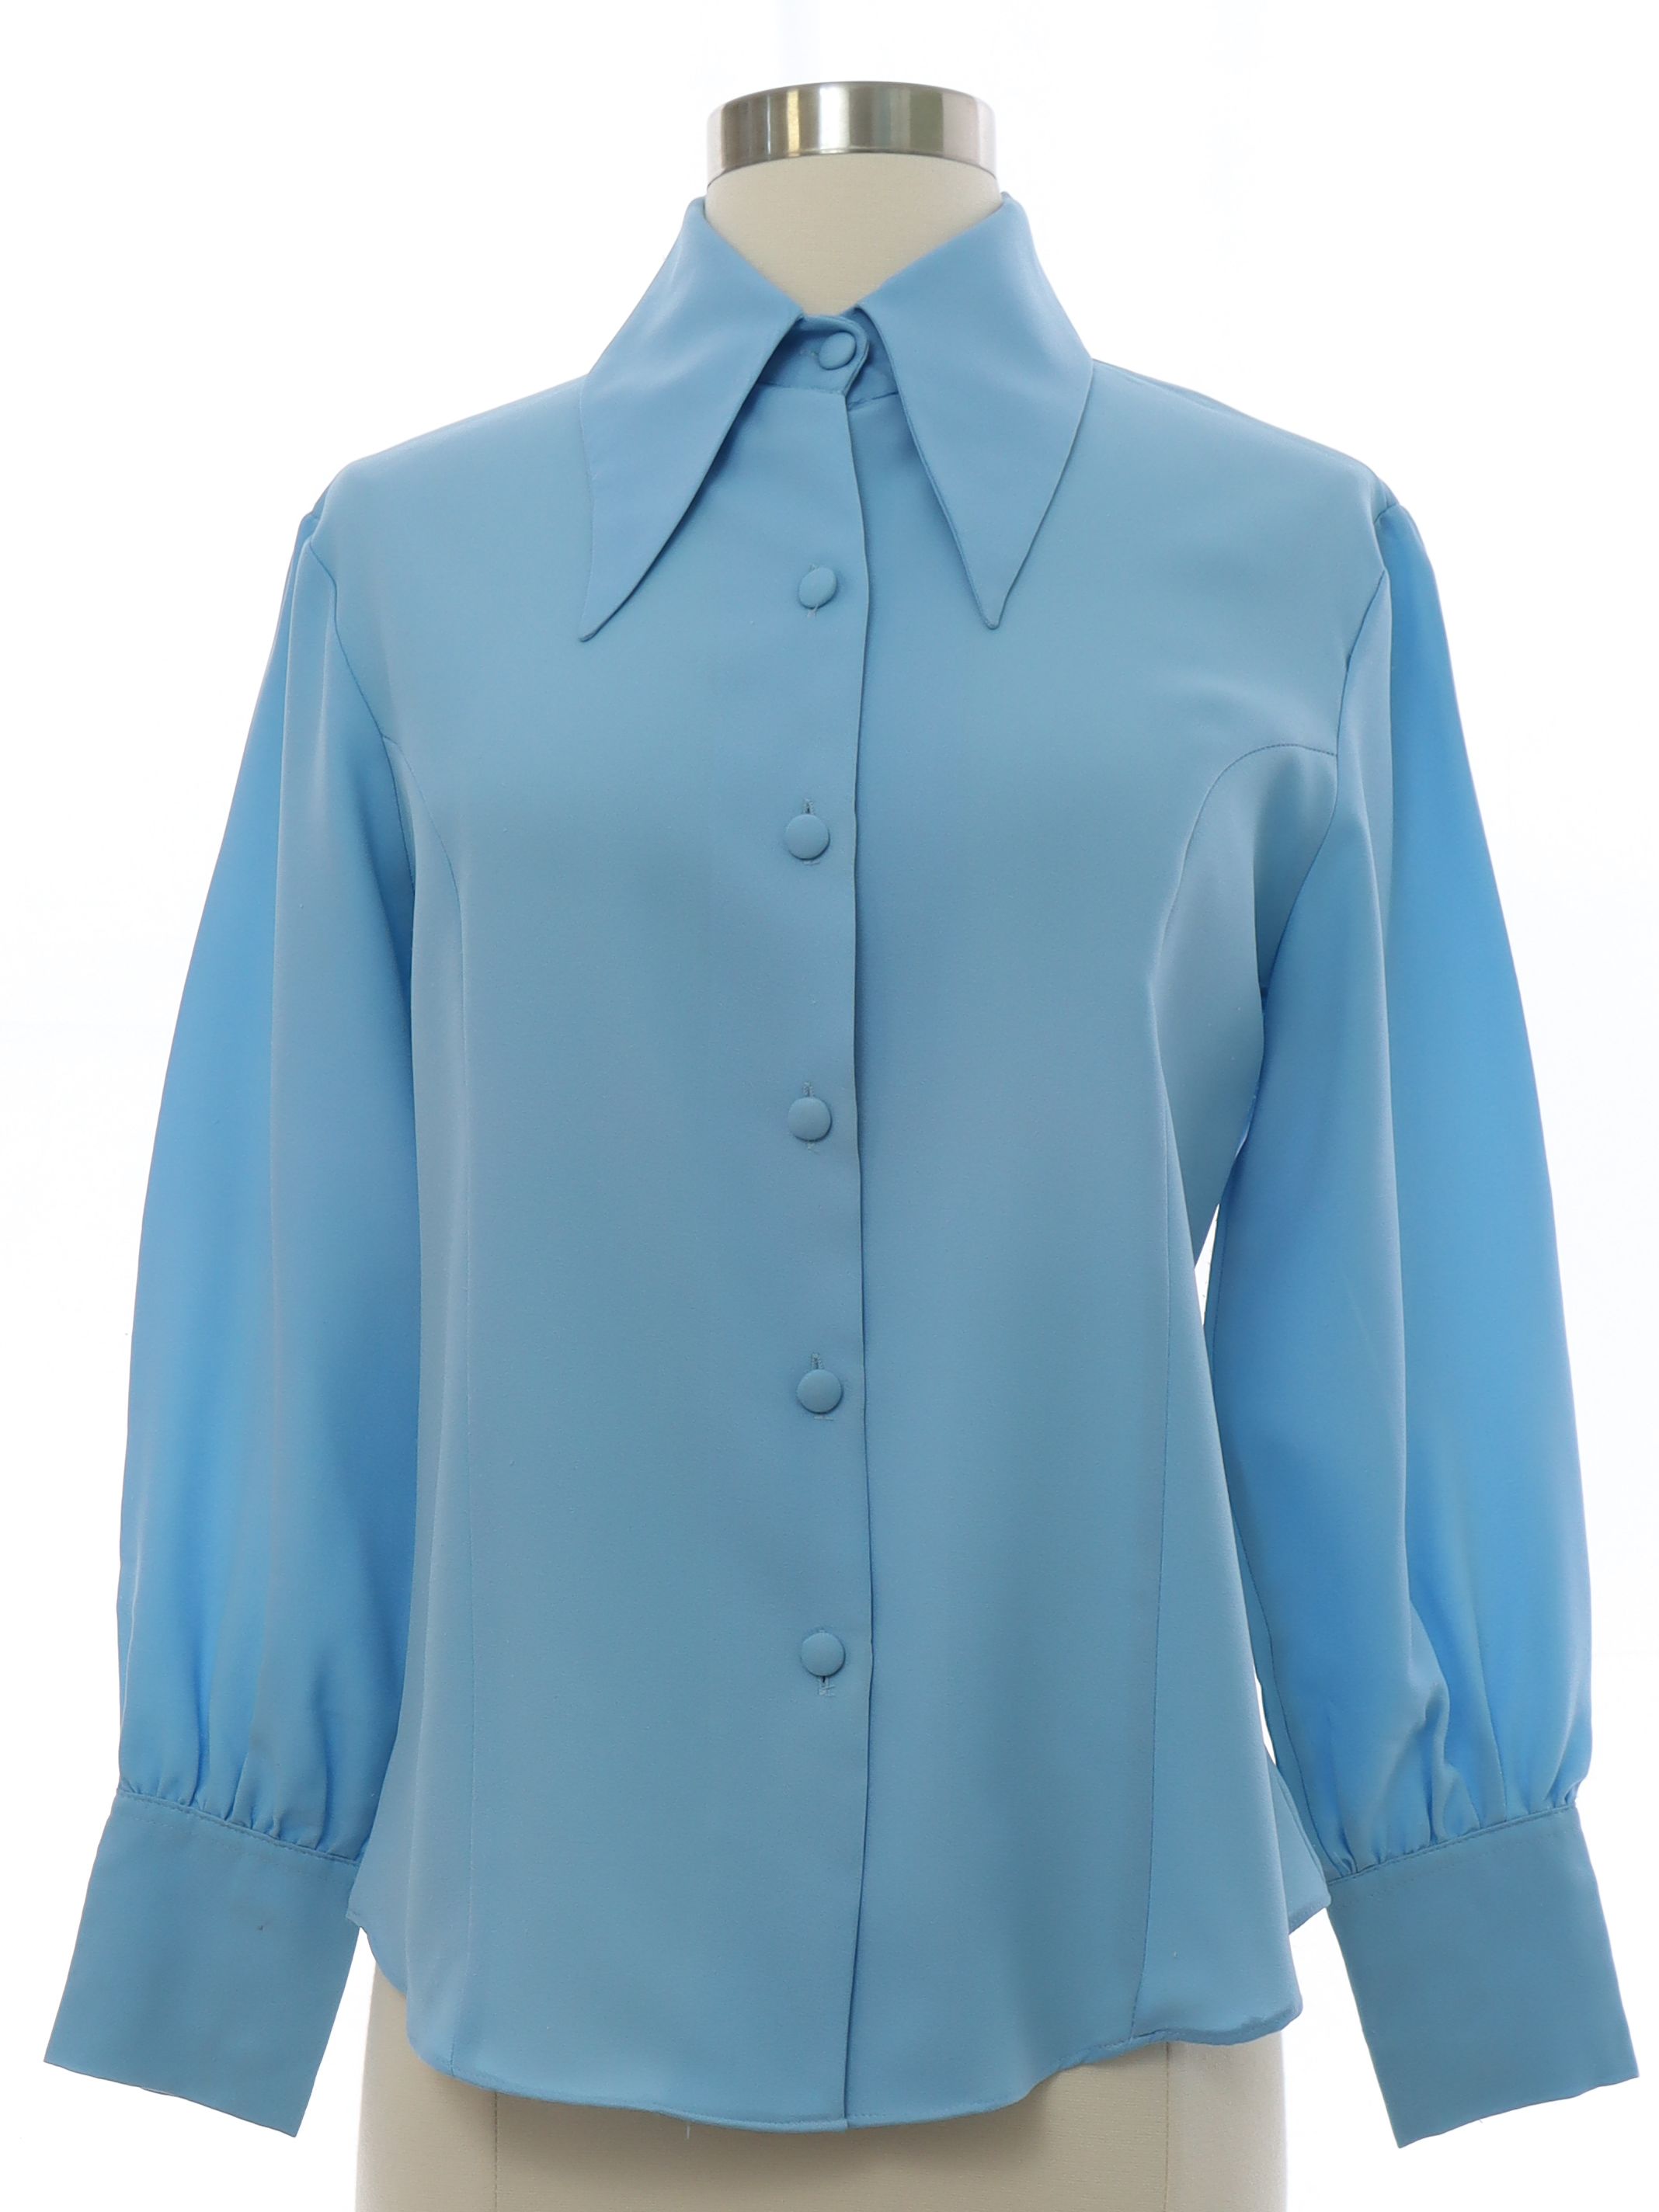 Retro 70s Shirt (Grants) : 70s -Grants- Womens sky blue polyester crepe ...